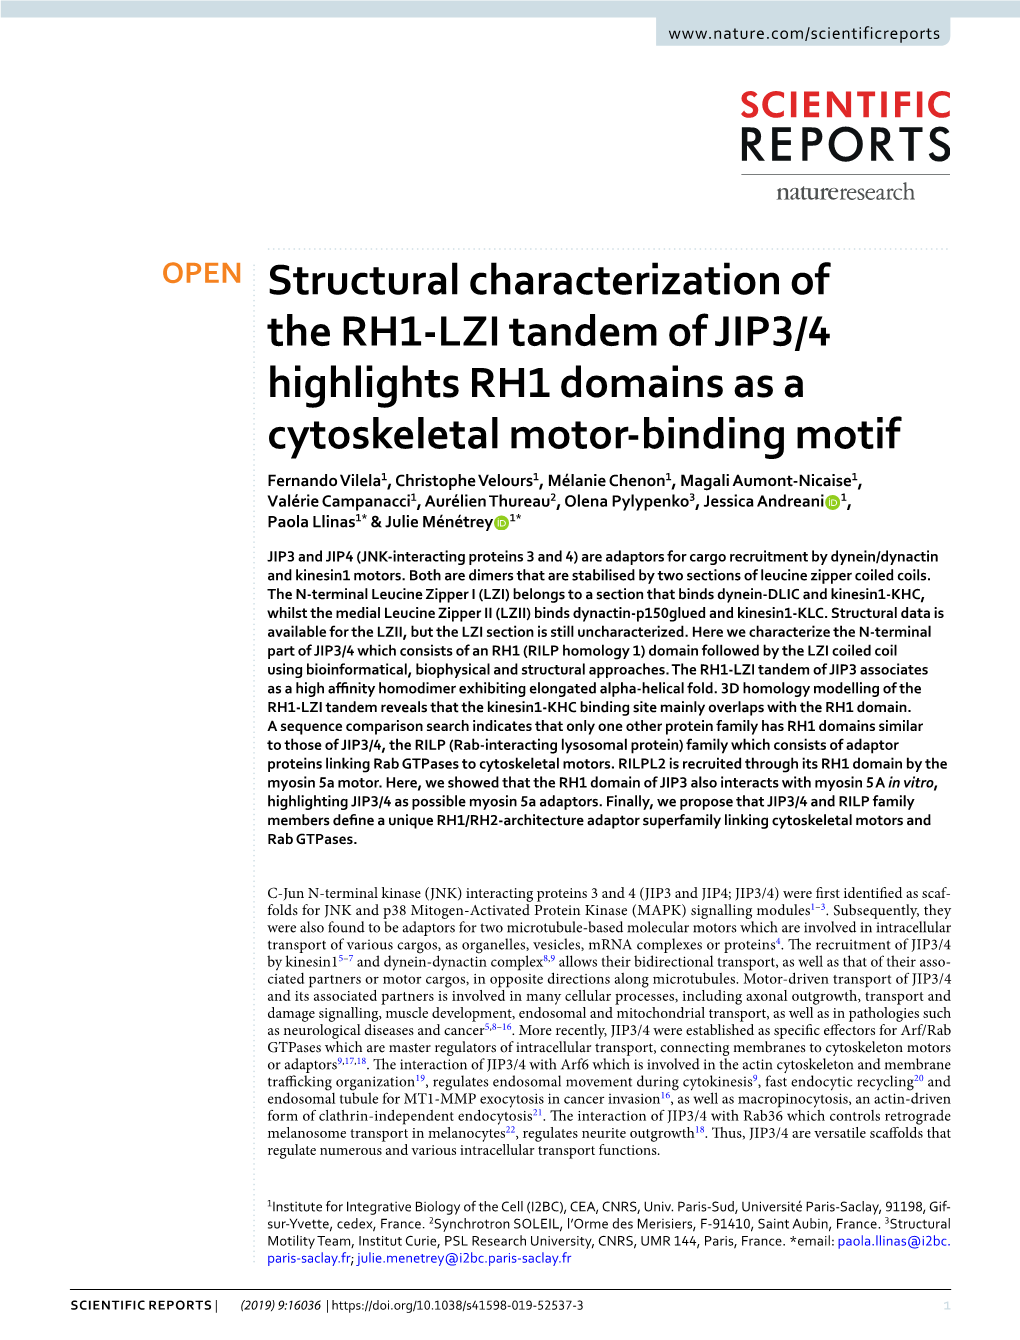 Structural Characterization of the RH1-LZI Tandem of JIP3/4